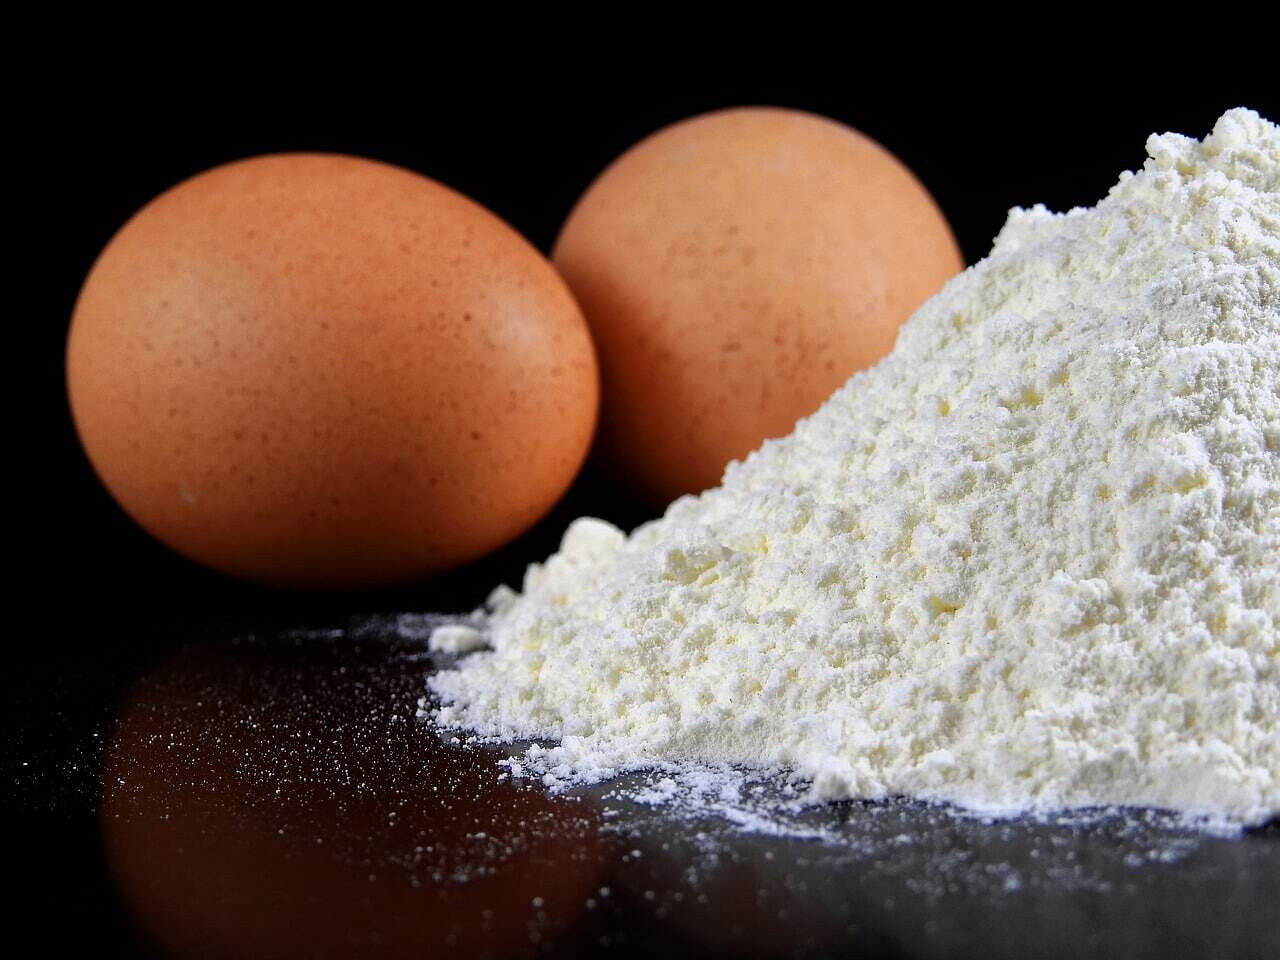 Global Whole Egg Powder Market Insights, Forecast To 2025